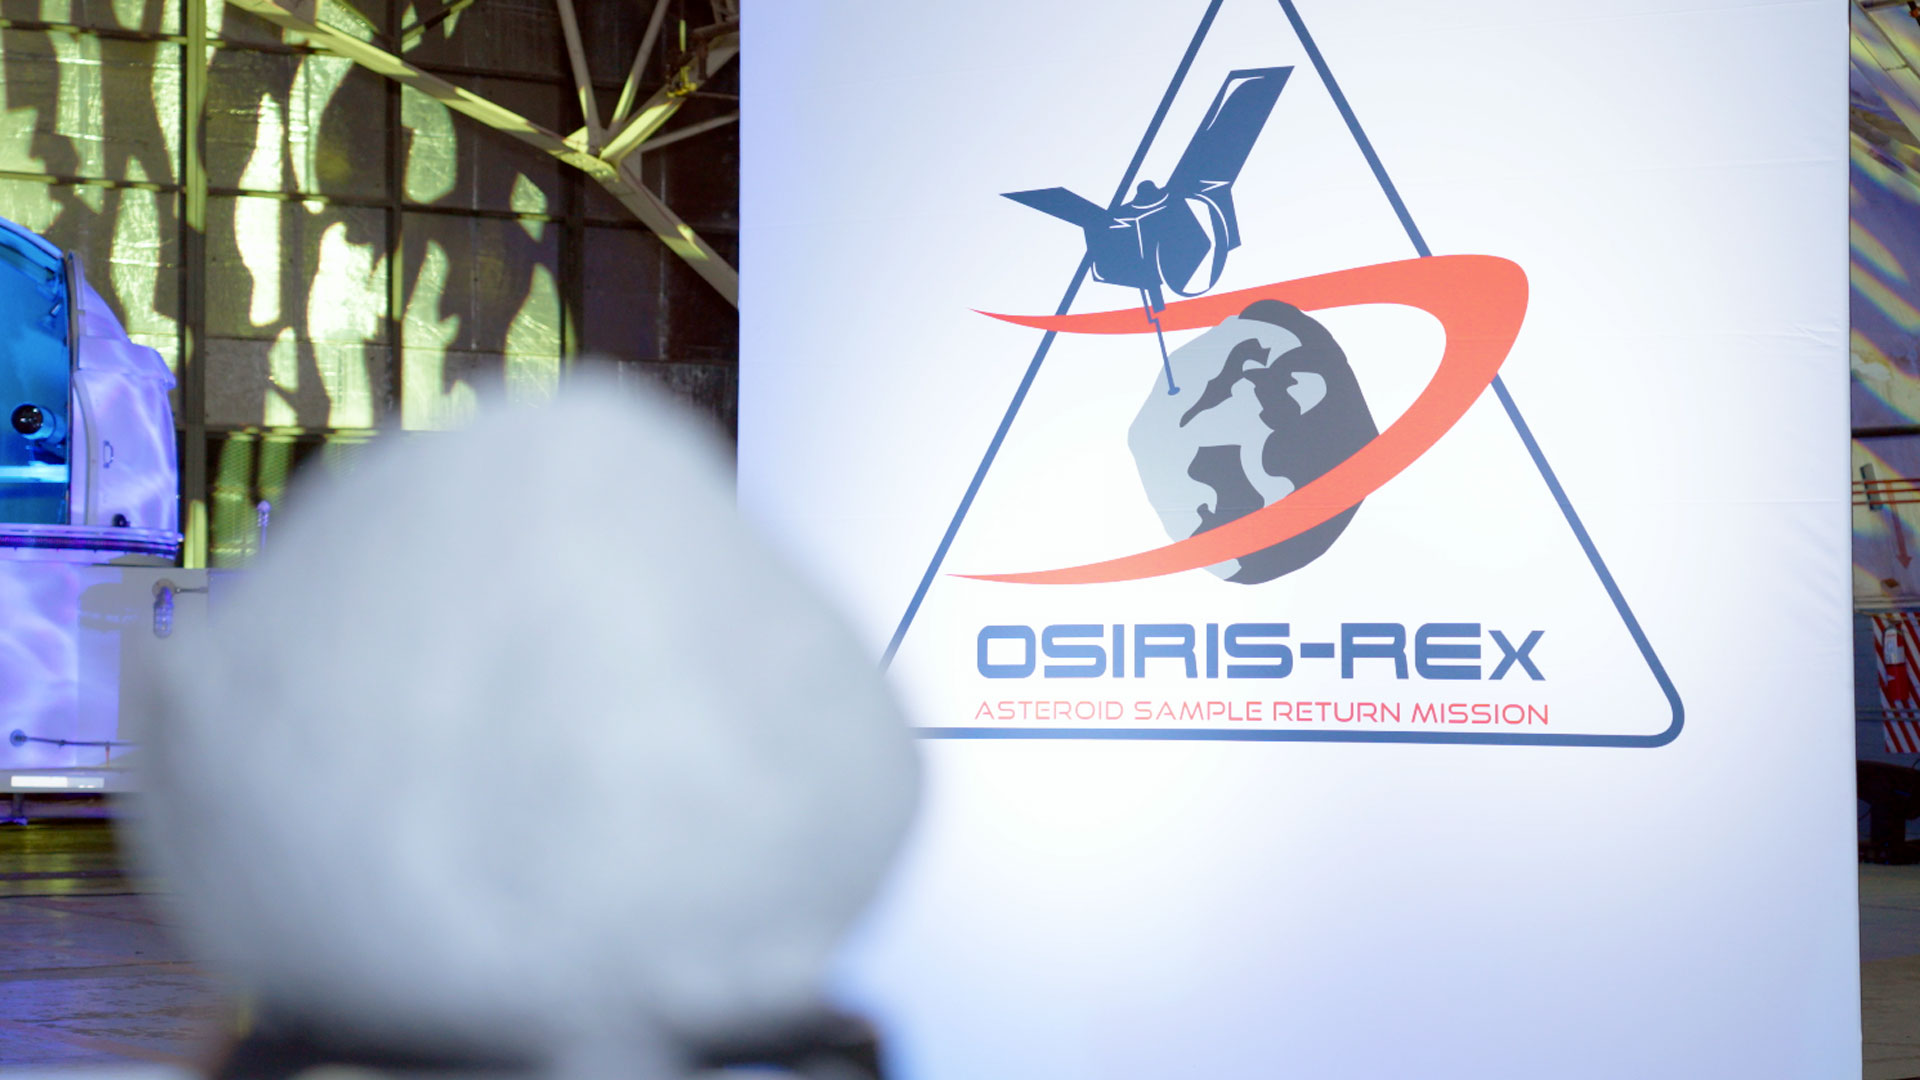 OSIRIS-REx: Sample Return